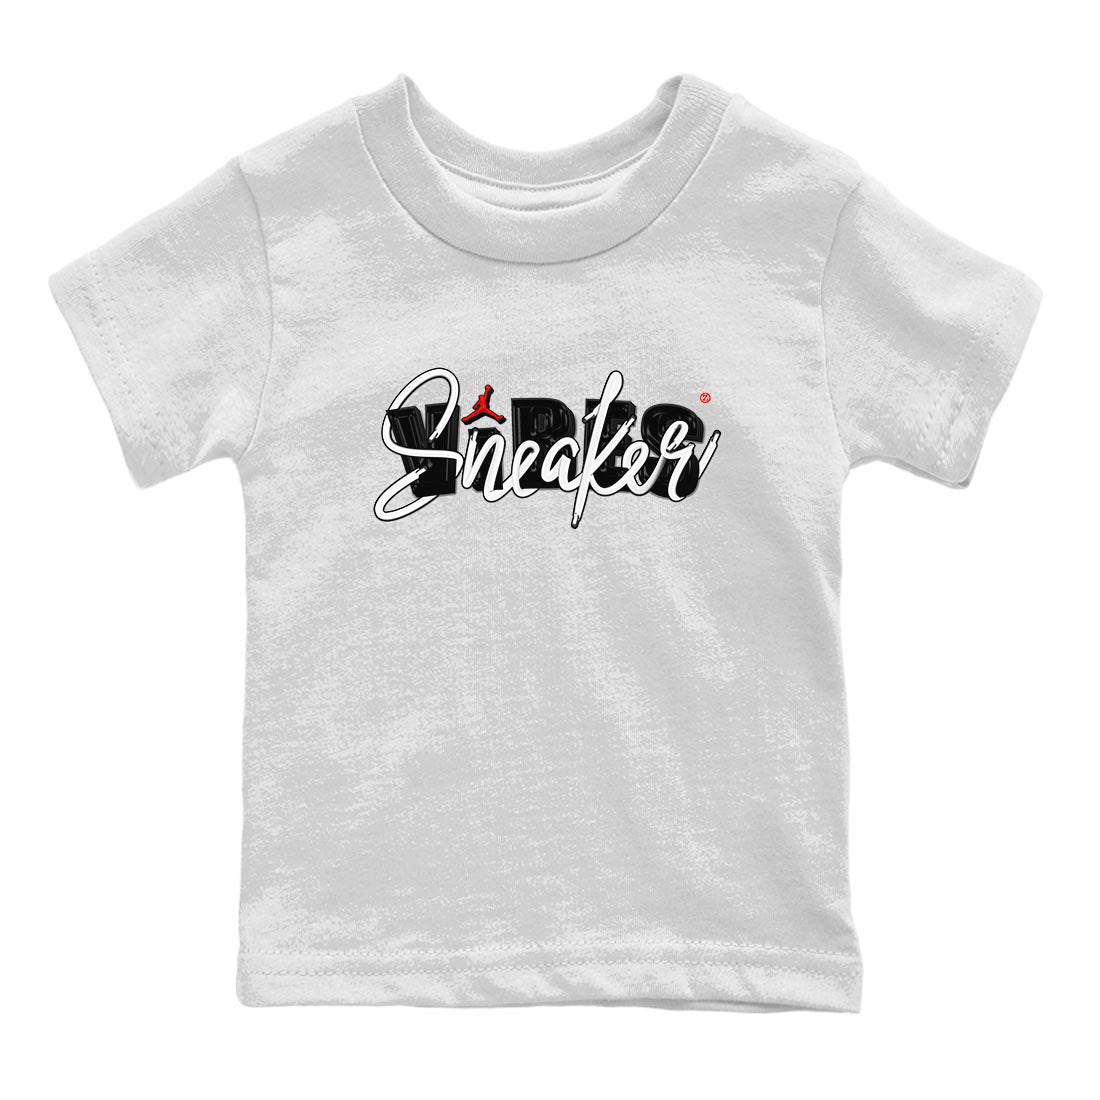 Yeezy 350 Bred shirt to match jordans Sneaker Vibes Streetwear Sneaker Shirt Yeezy Boost 350 V2 Bred Drip Gear Zone Sneaker Matching Clothing Baby Toddler White 2 T-Shirt